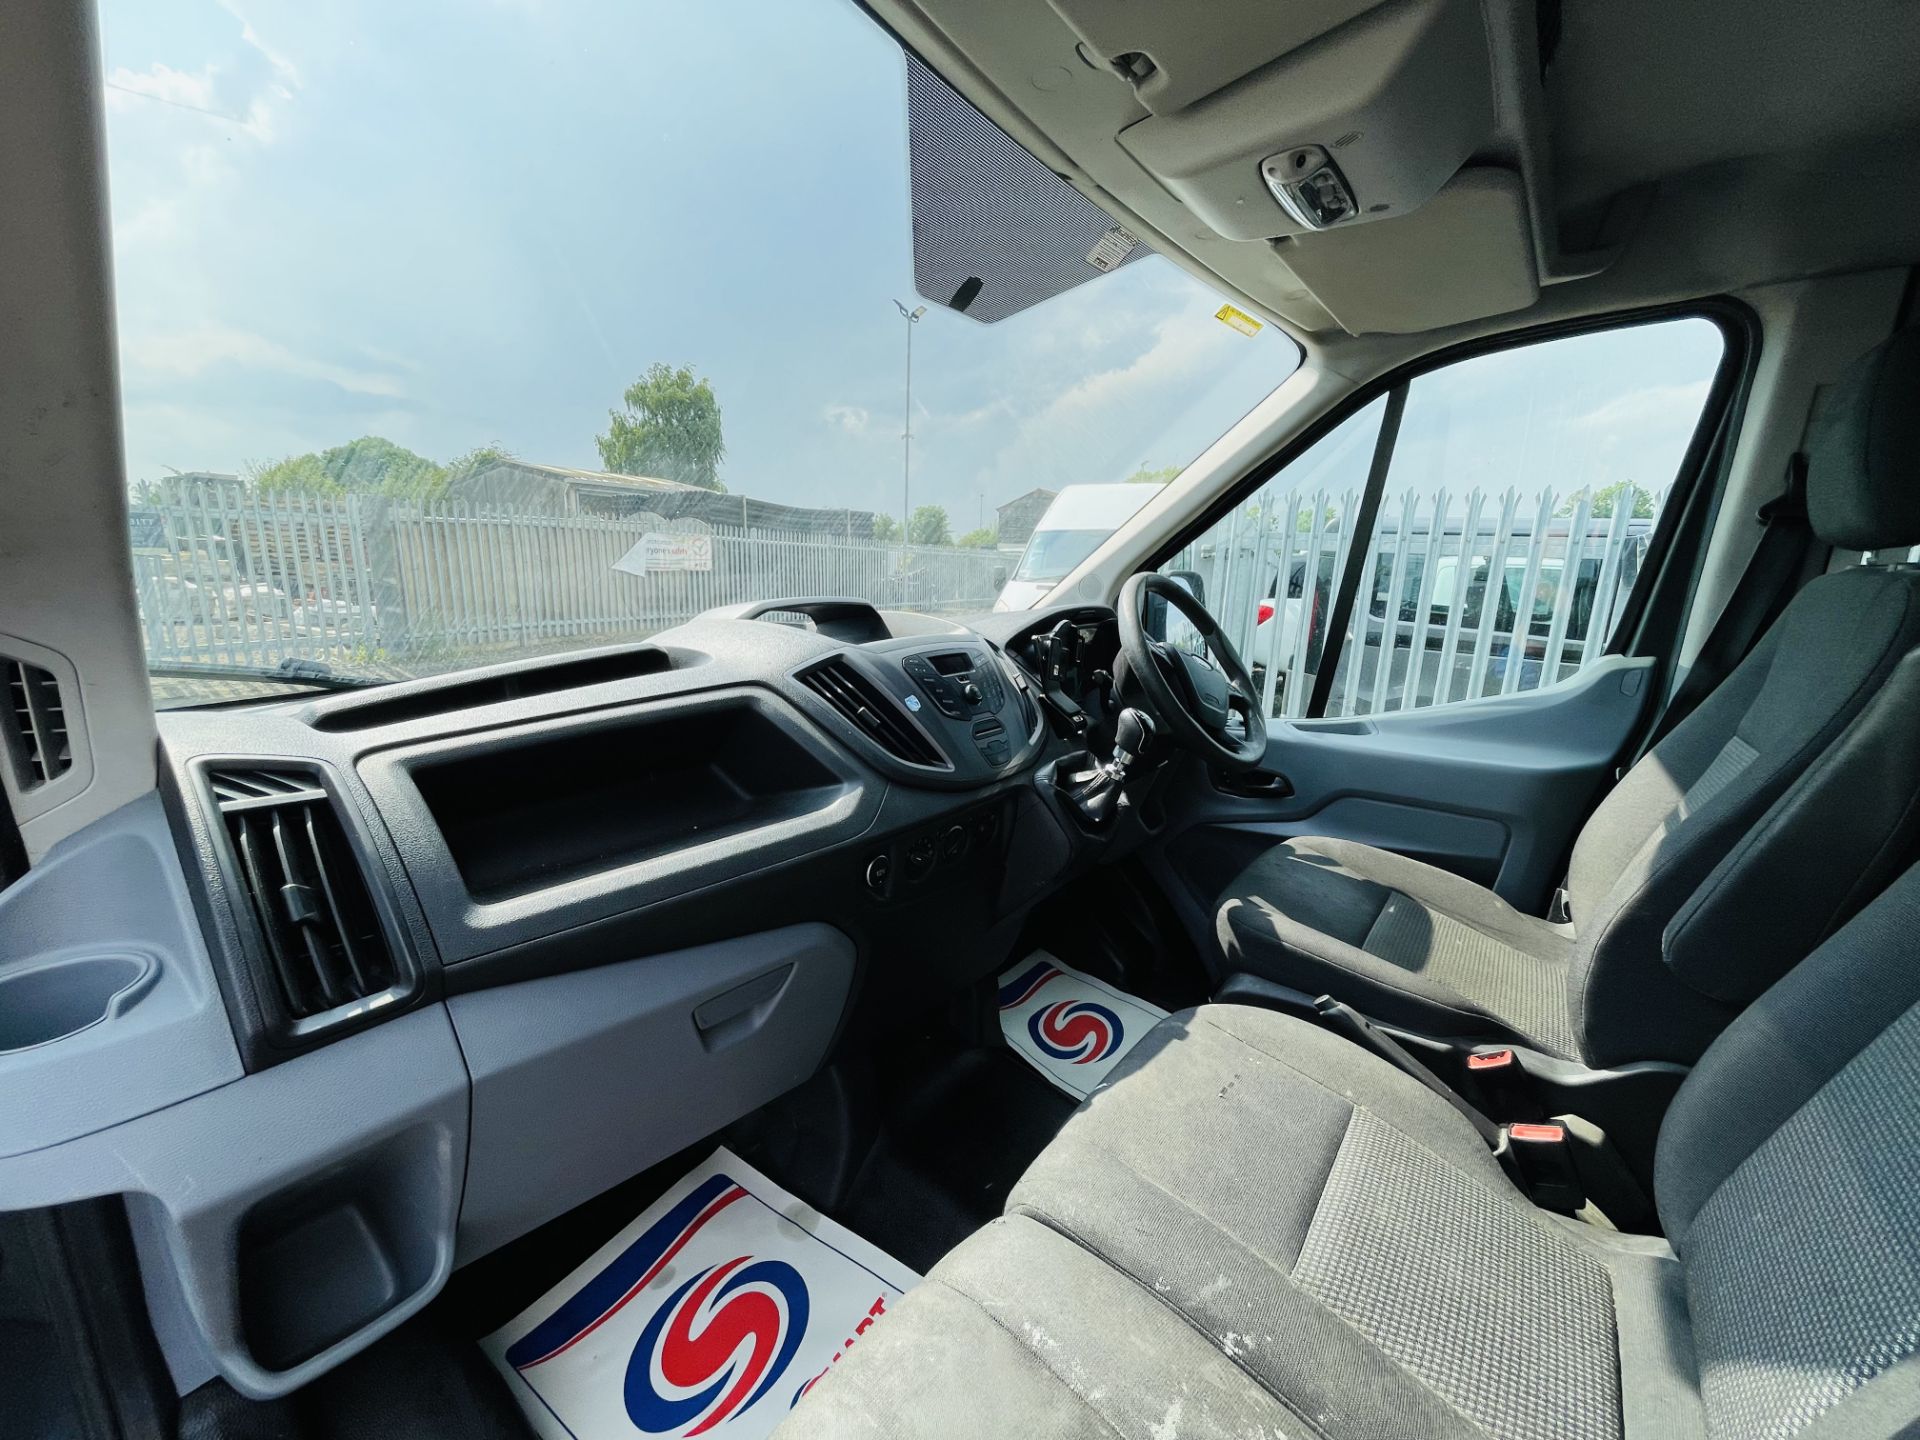 Ford Transit 2.2 TDCI 100 L3 H2 T350 2015 '65 Reg' - Panel Van - LCV - Grey - Image 11 of 14